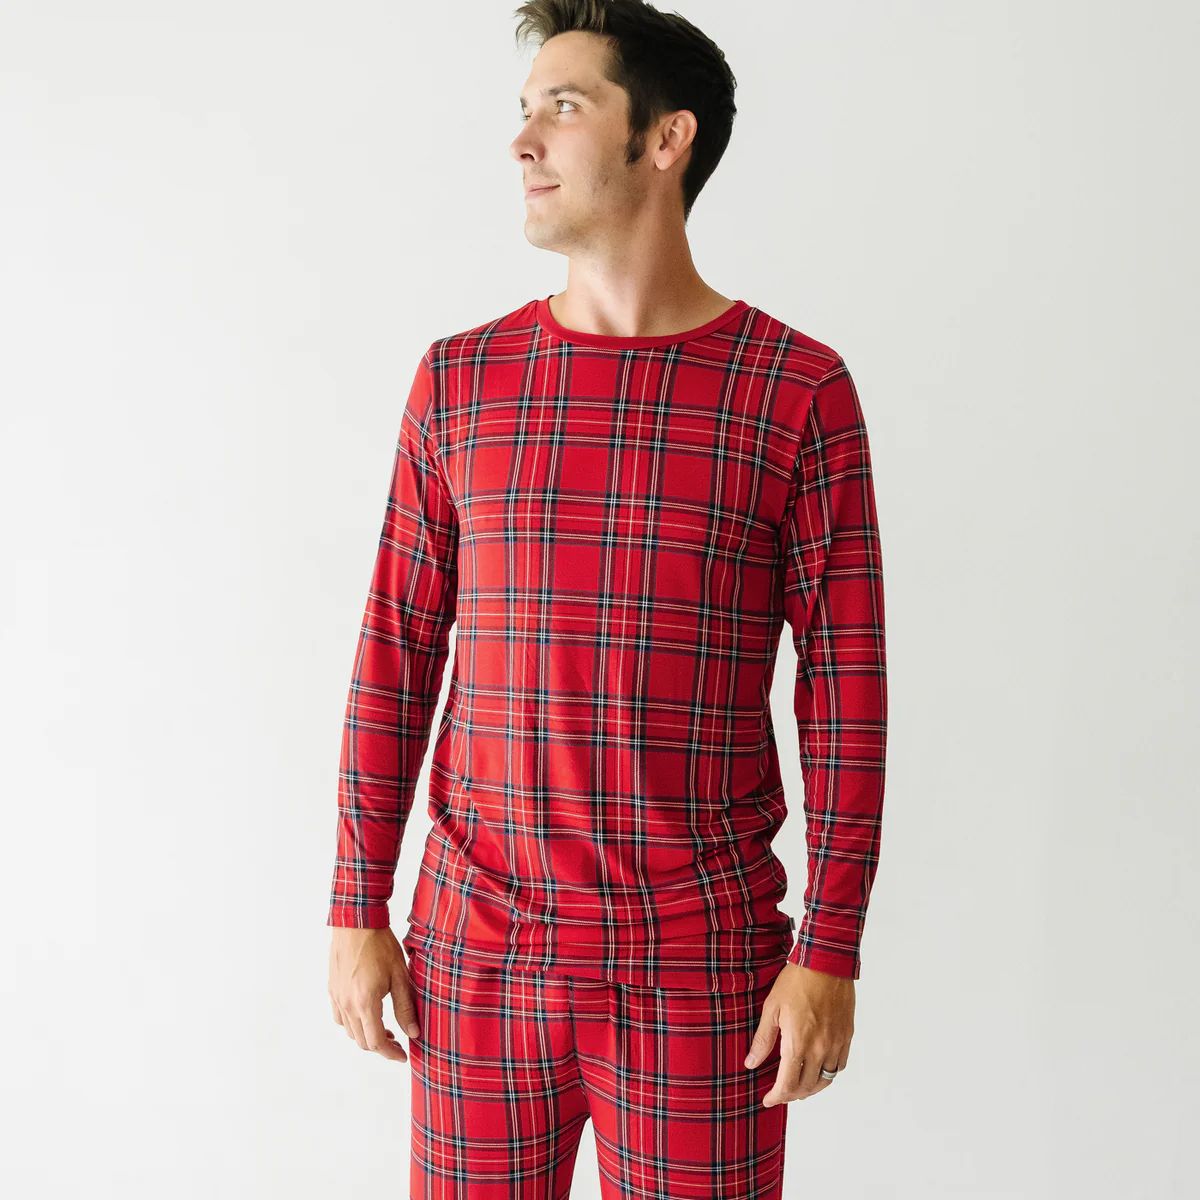 Holiday Plaid Men's Pajama Top | Little Sleepies